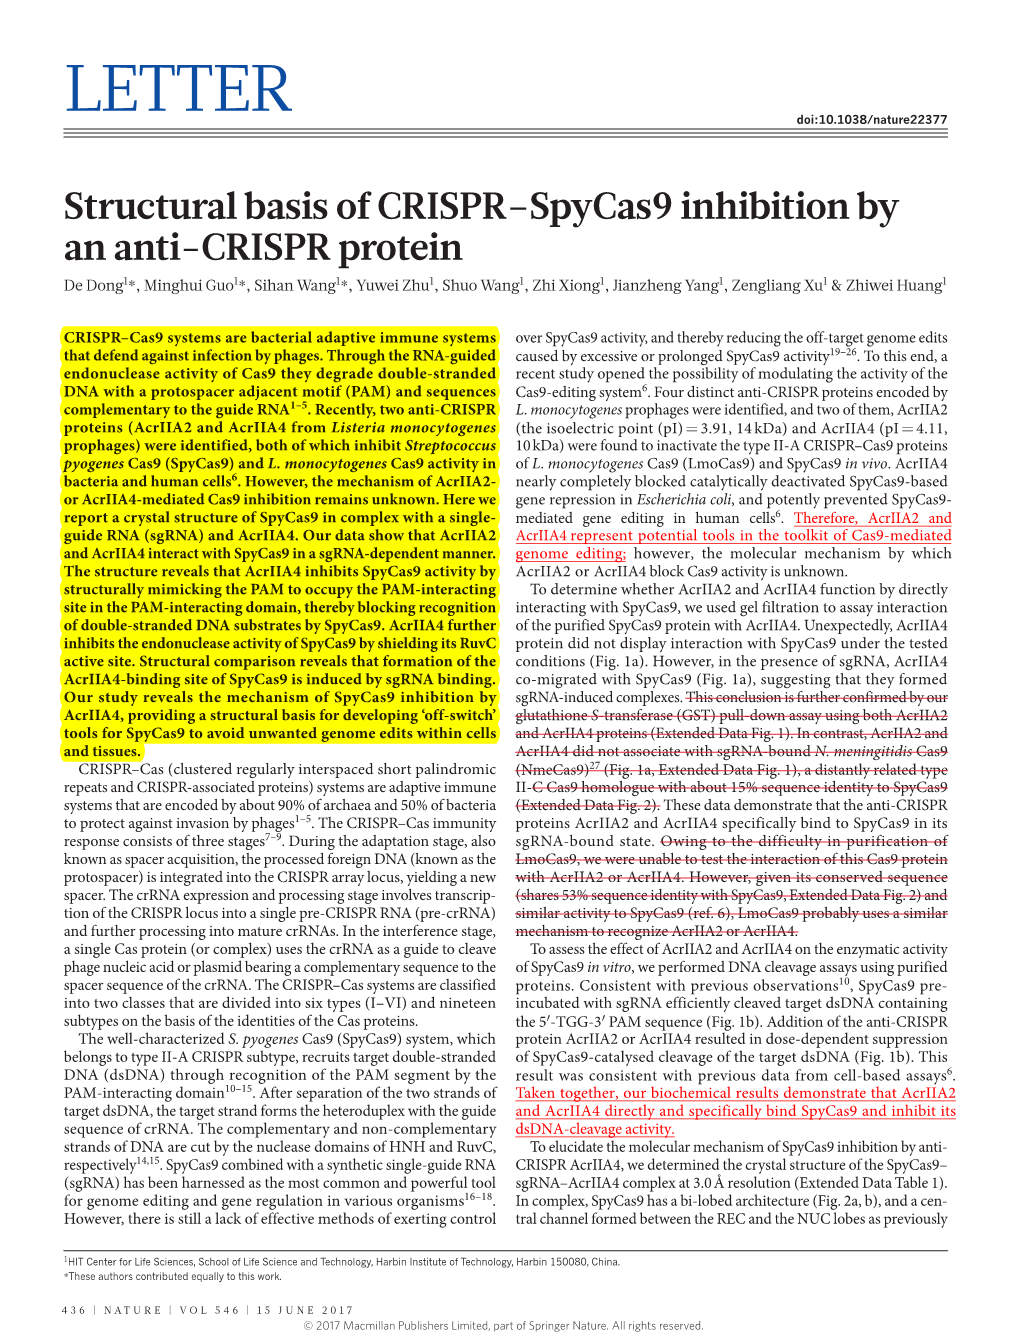 Structural Basis of CRISPR–Spycas9 Inhibition by an Anti-CRISPR Protein